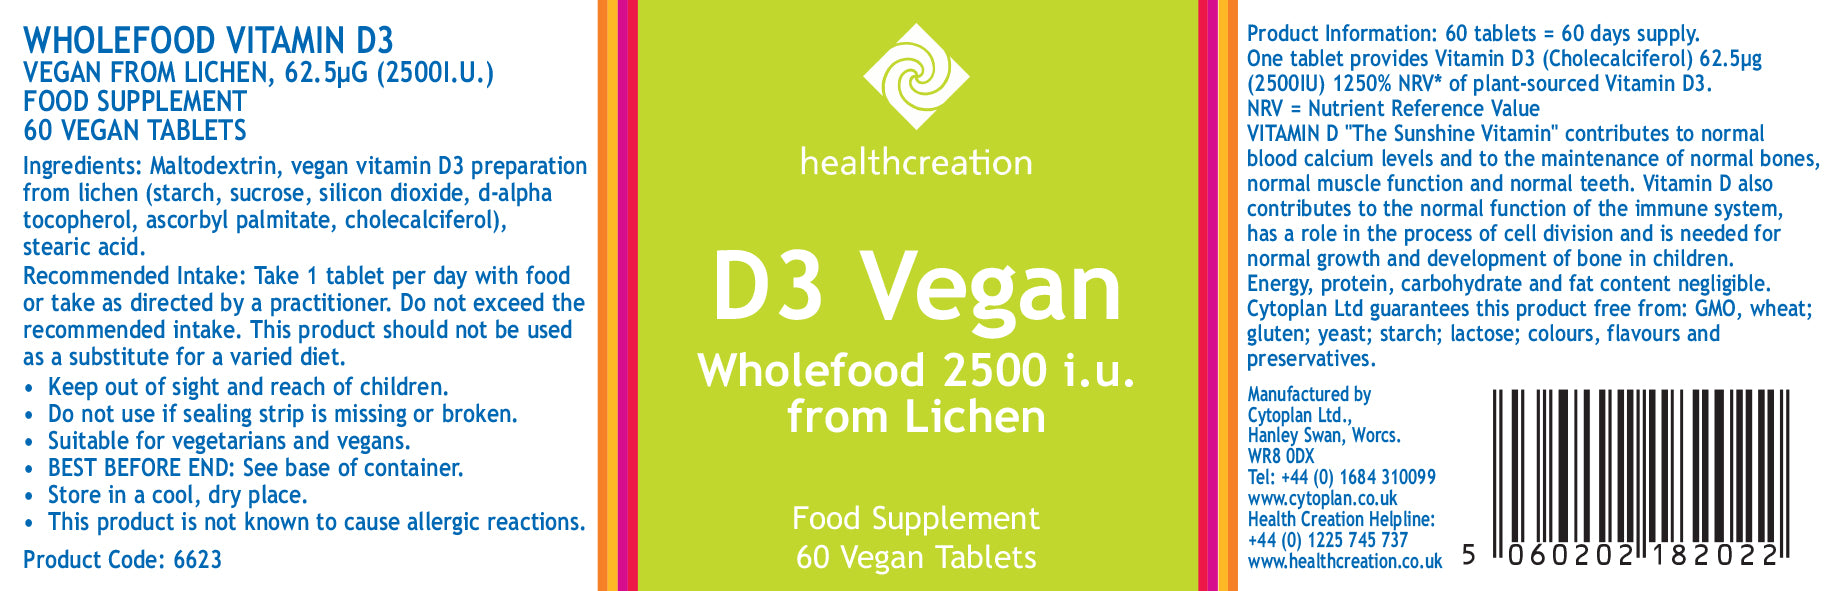 Cytoplan Health Creation D3 Vegan Wholefood 2500 iu from Lichen 60's